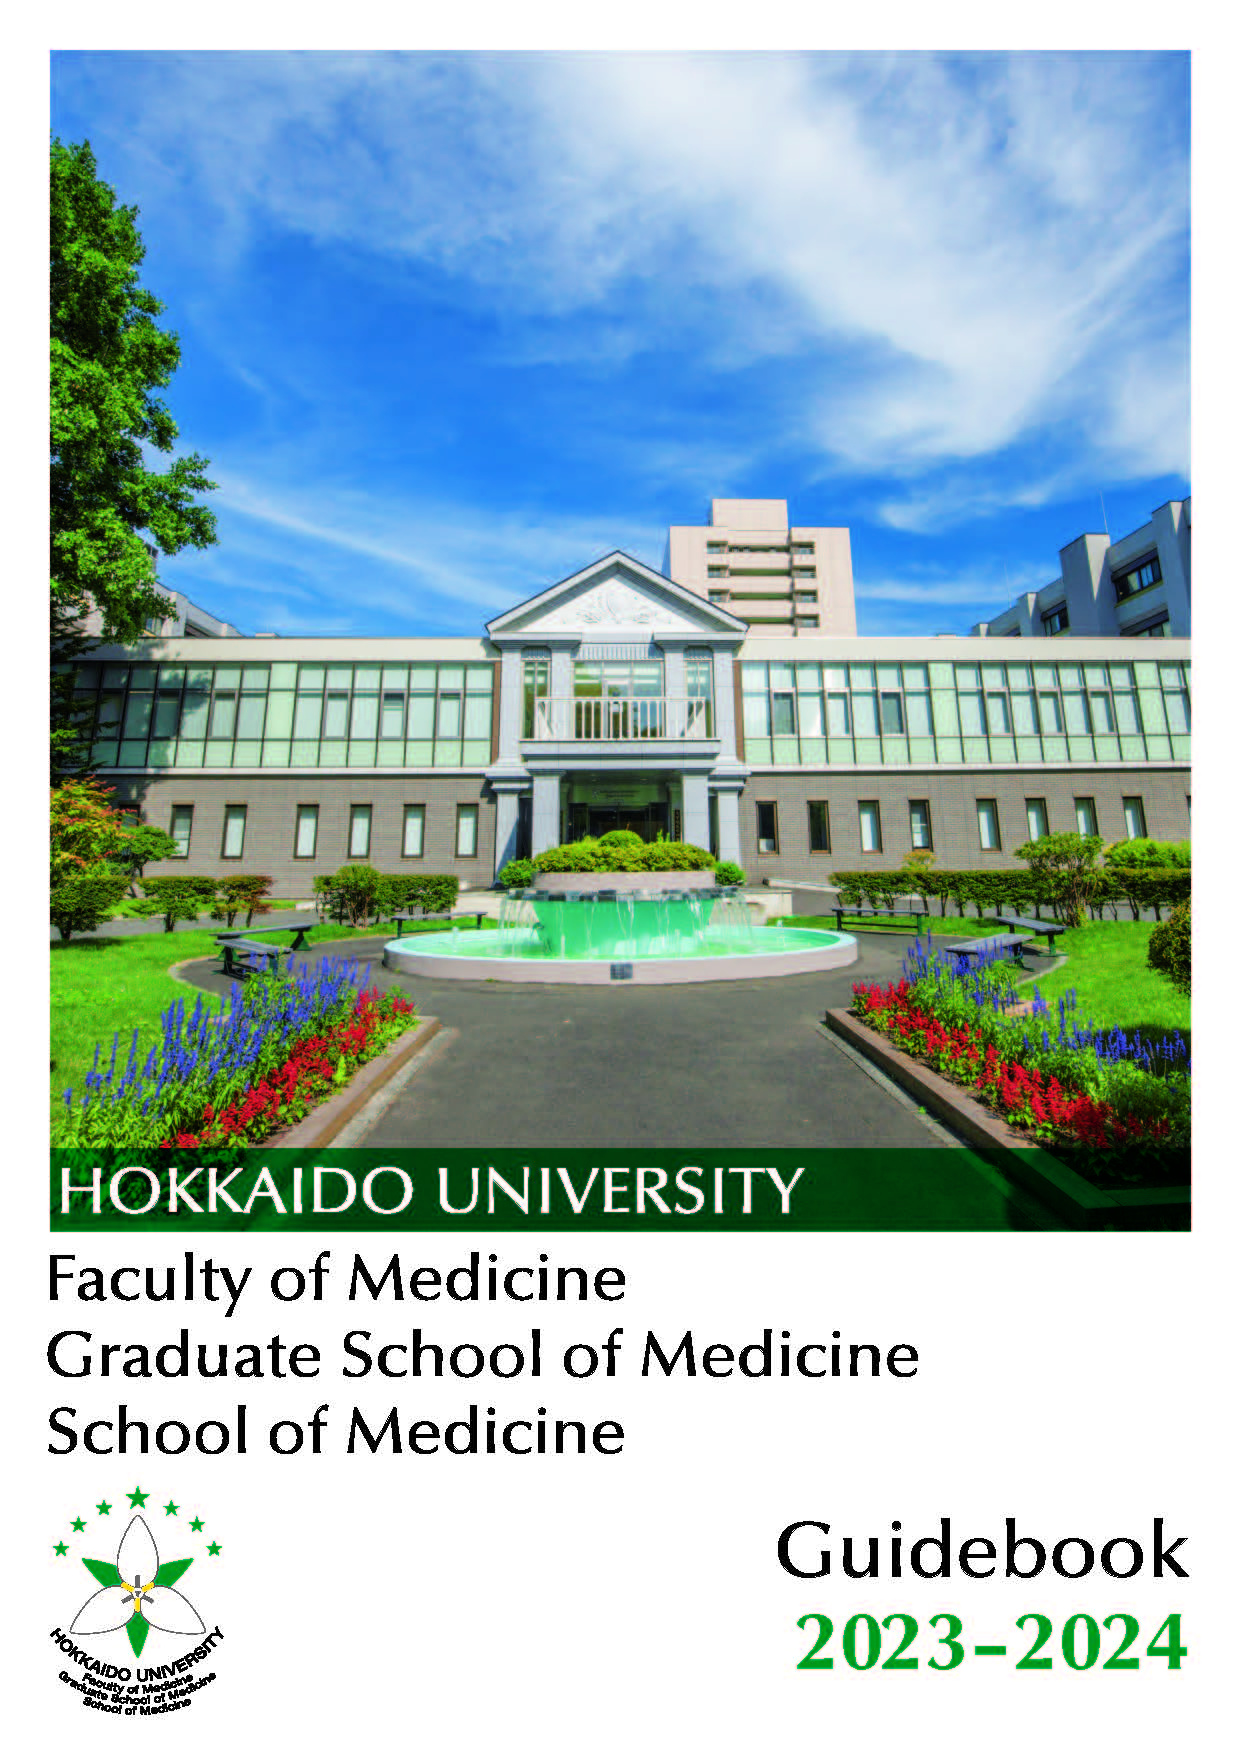 Guidebook of the Faculty of Medicine / Graduate School of Medicine / School of Medicine